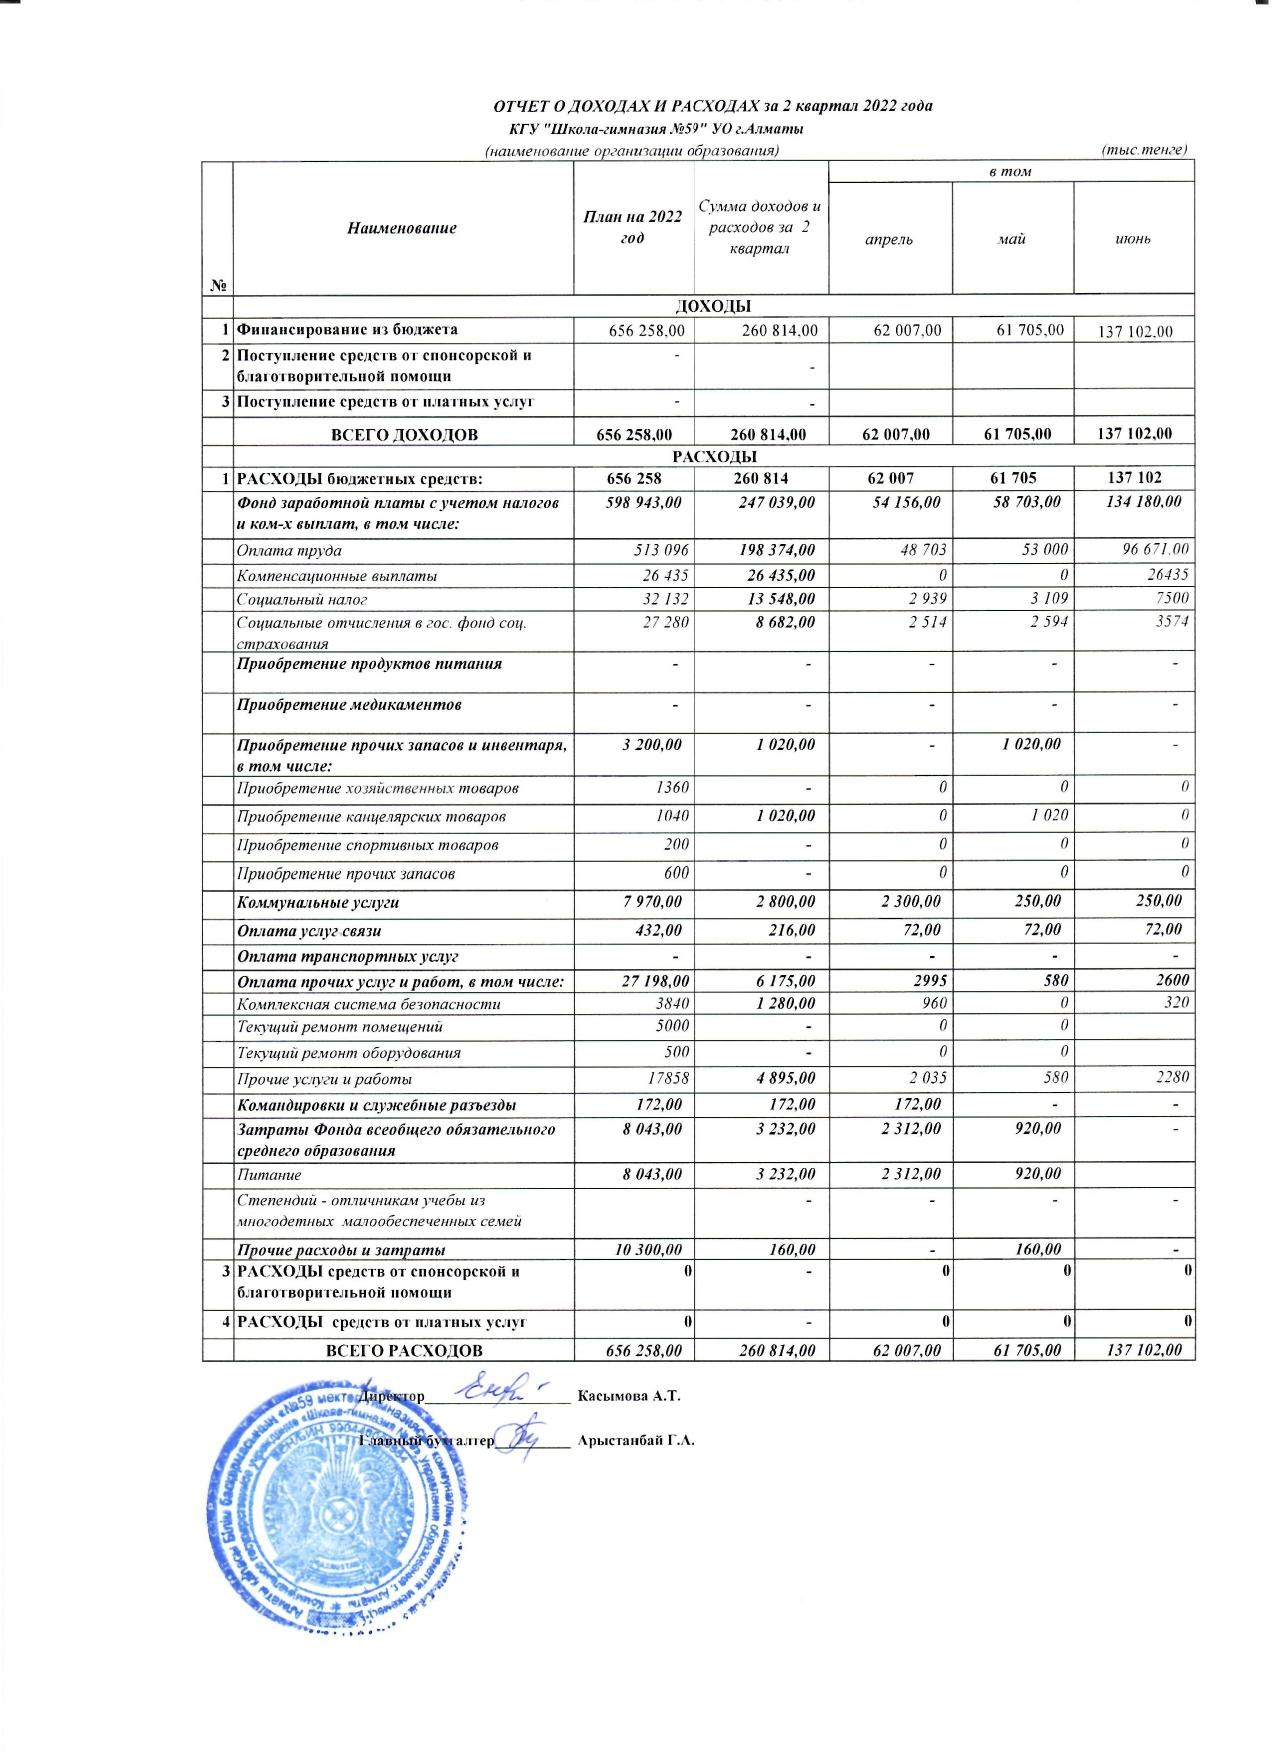 Отчет о доходах и расходах за 2 квартал 2022г